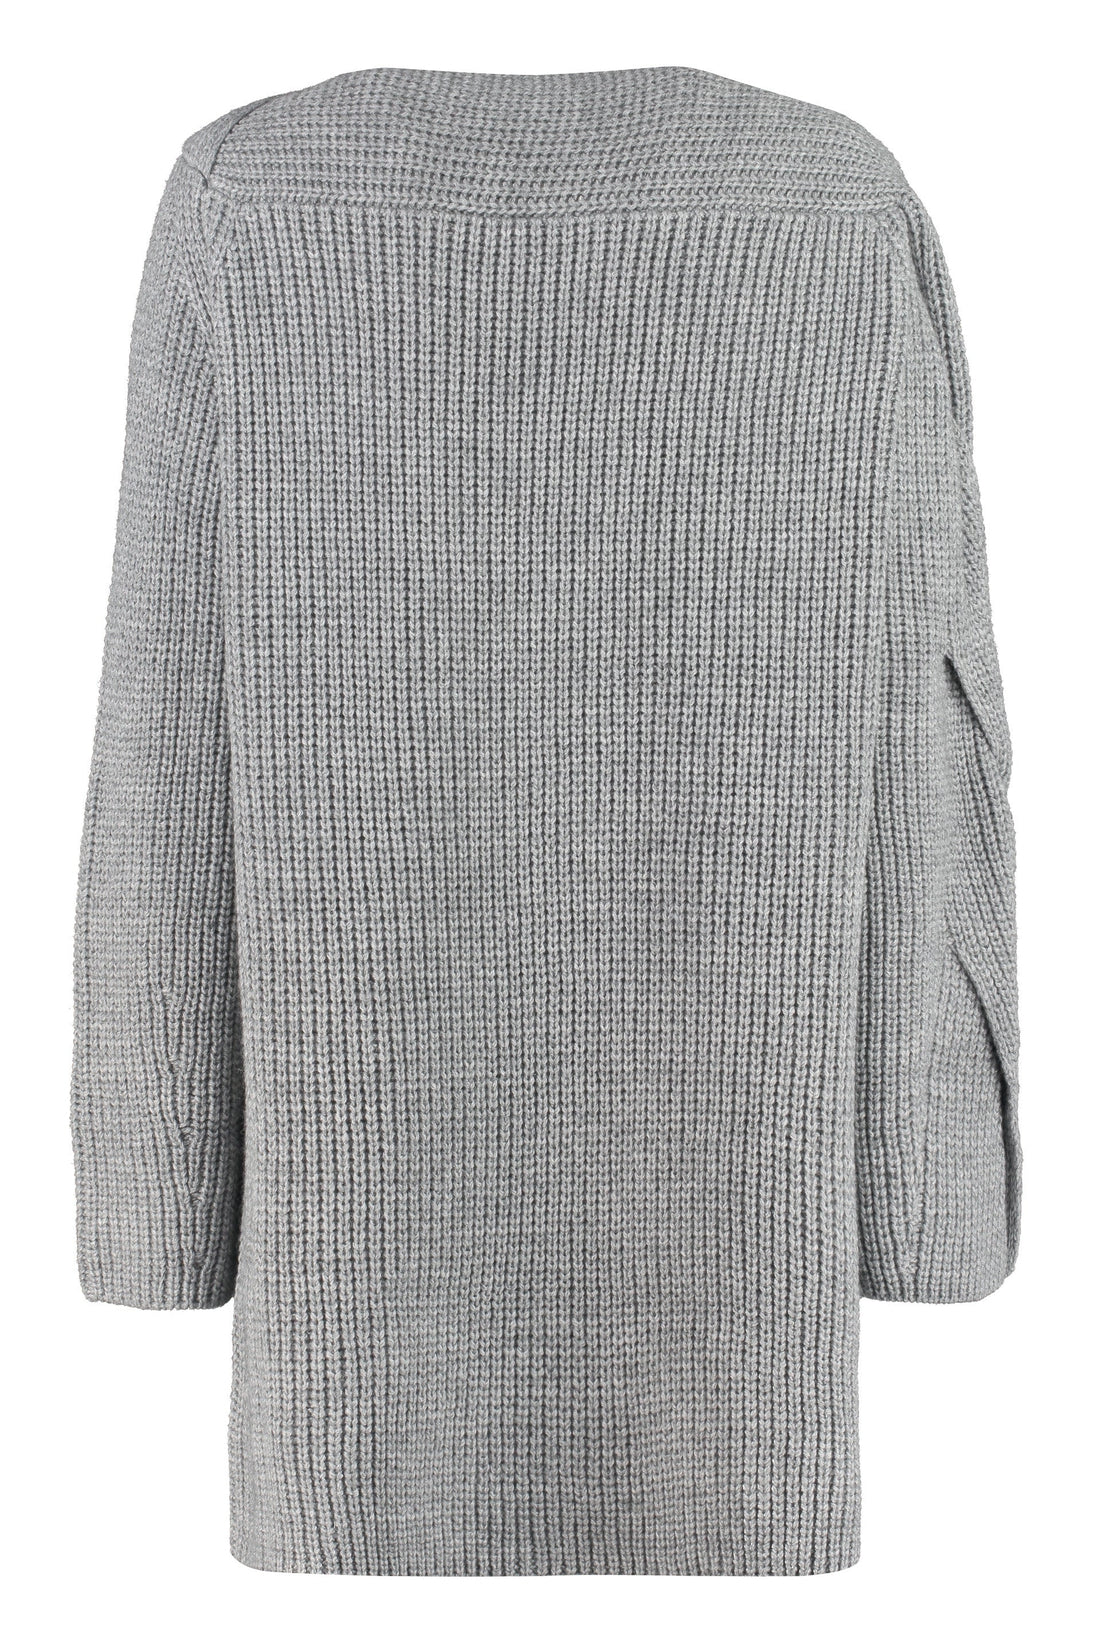 MSGM-OUTLET-SALE-Ribbed knit dress-ARCHIVIST